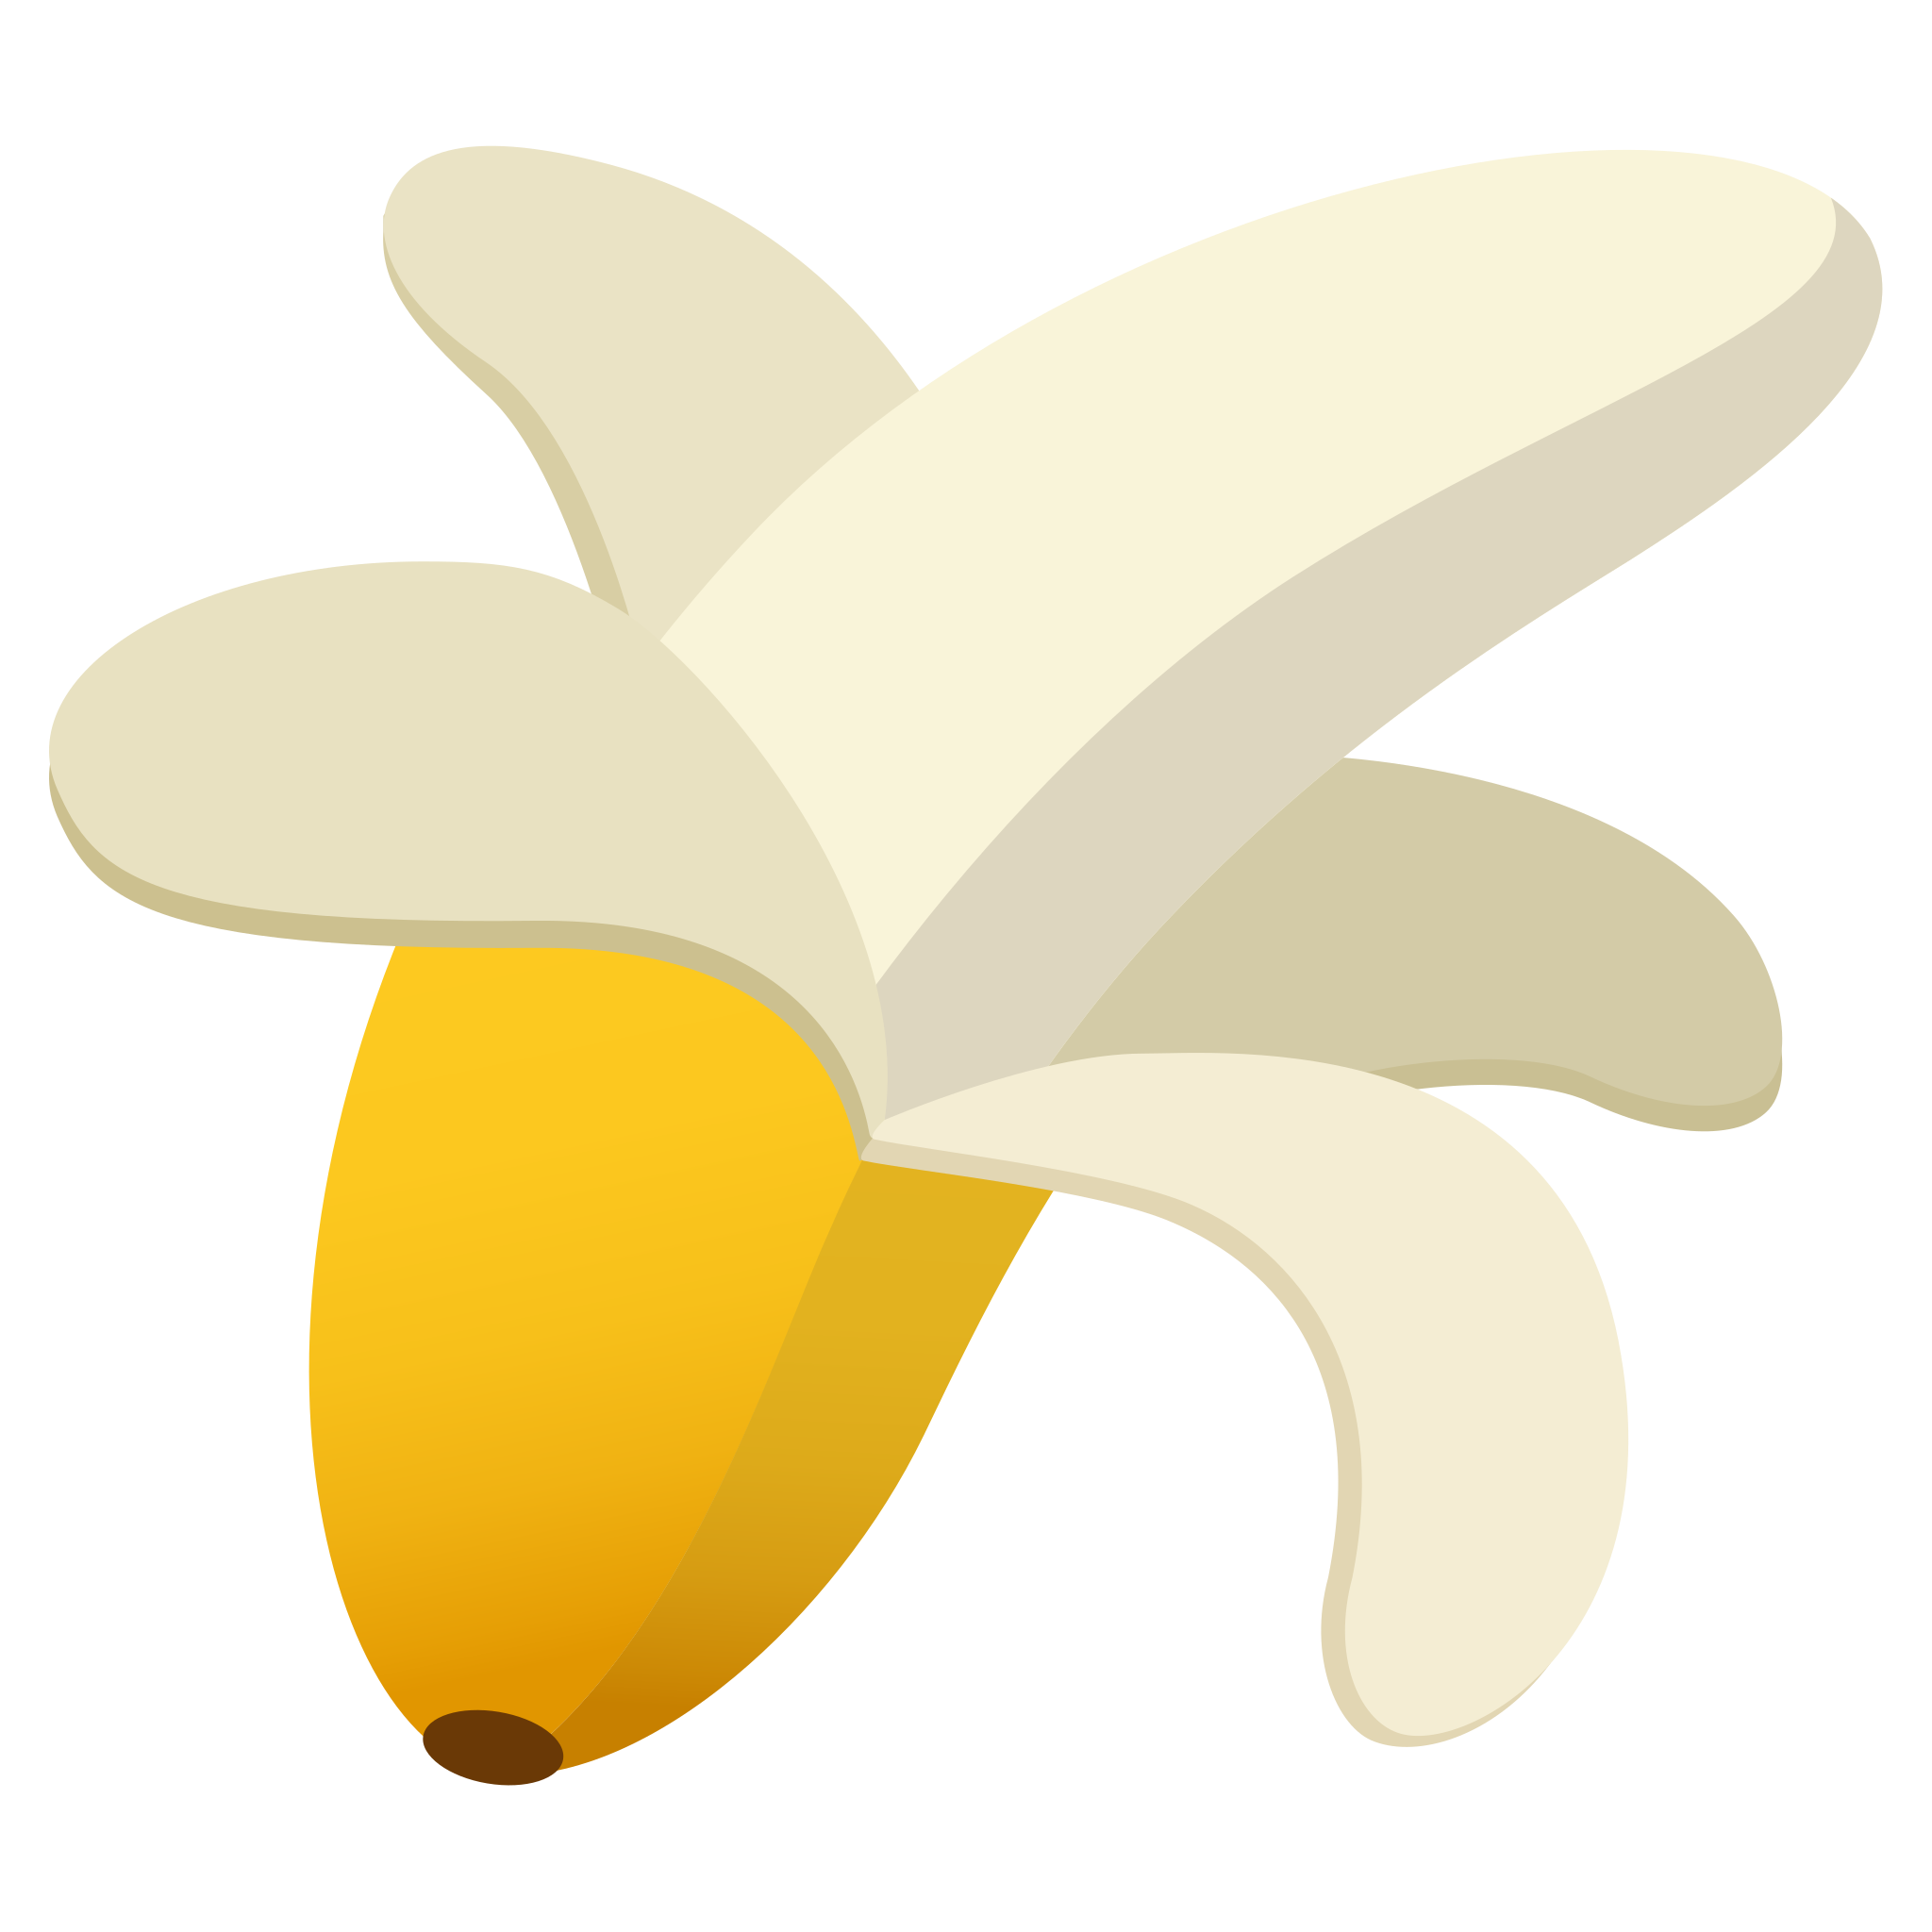 File:Bananas.svg - Wikimedia Commons